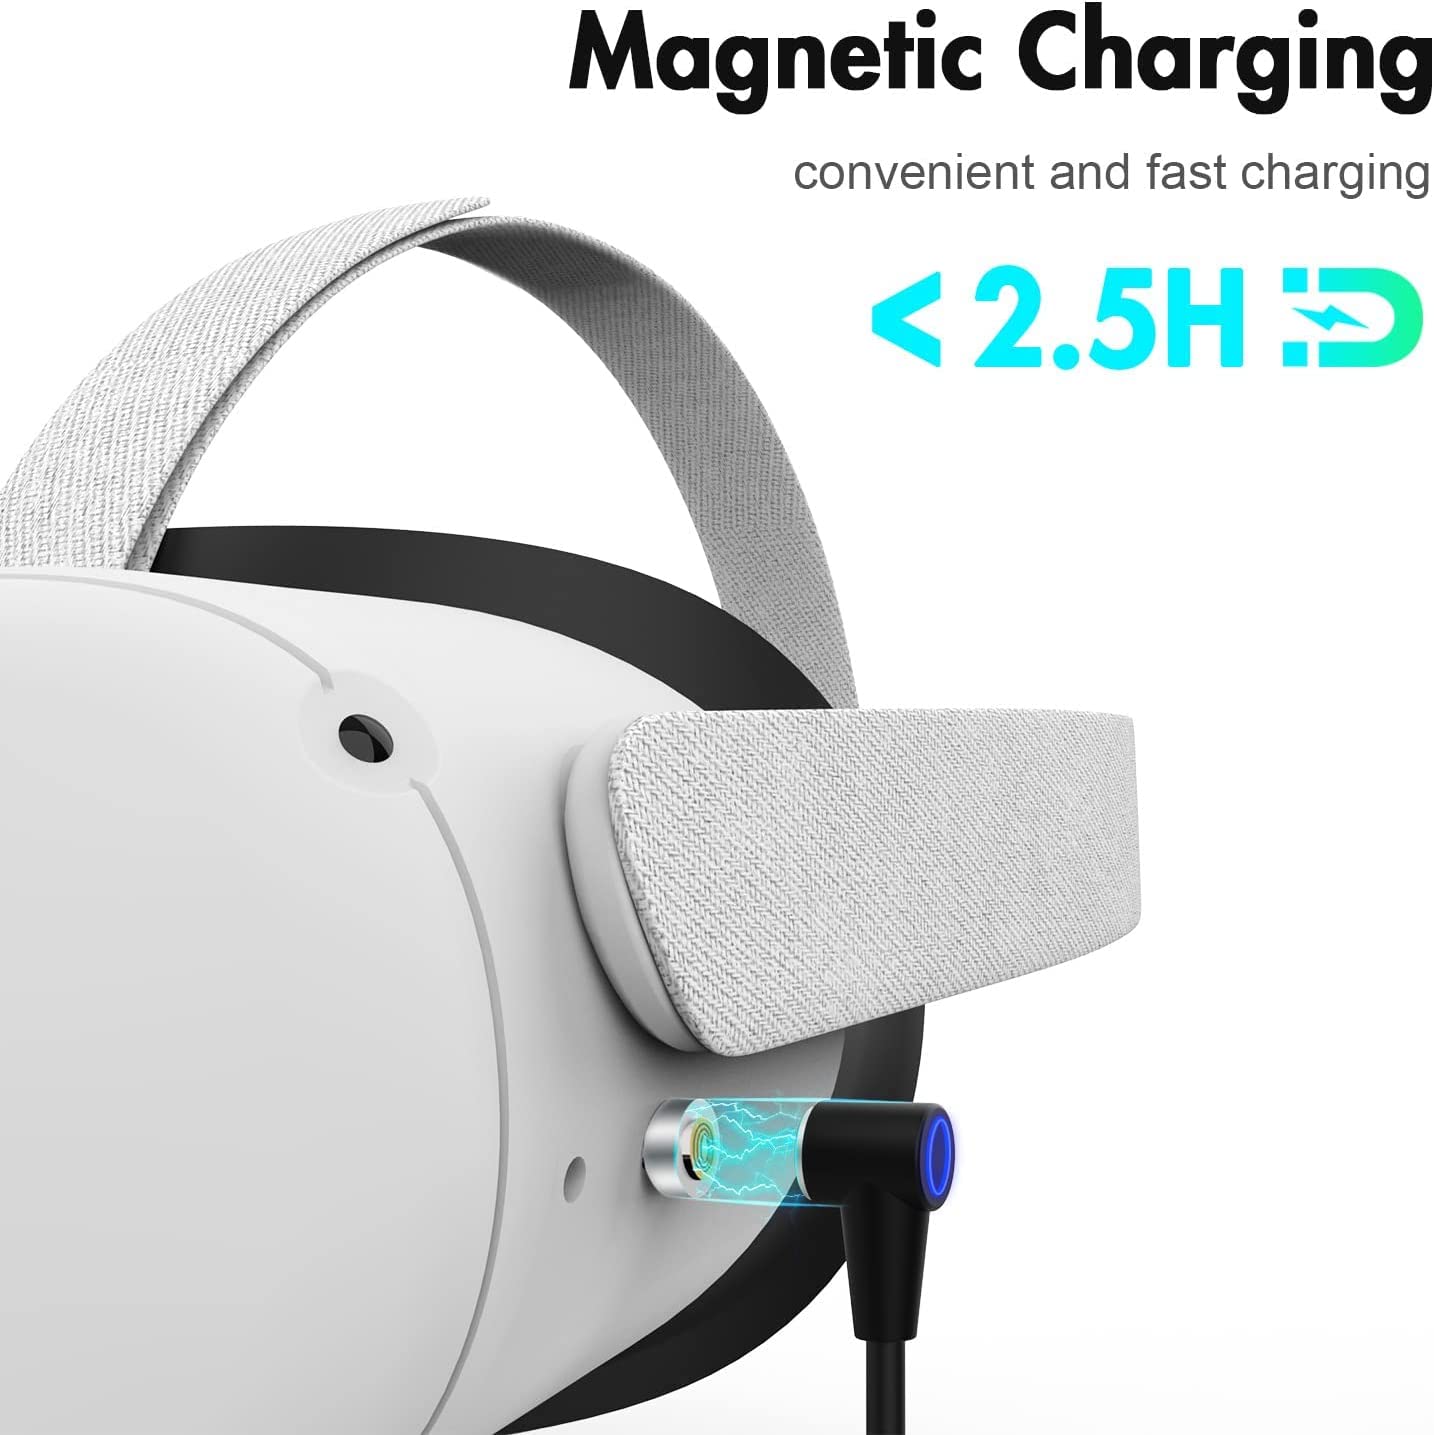 پایه شارژ هدست واقعیت مجازی MAKINGTEC Charging Dock for Oculus Quest 2 - ارسال ۱۰ الی ۱۵ روز کاری